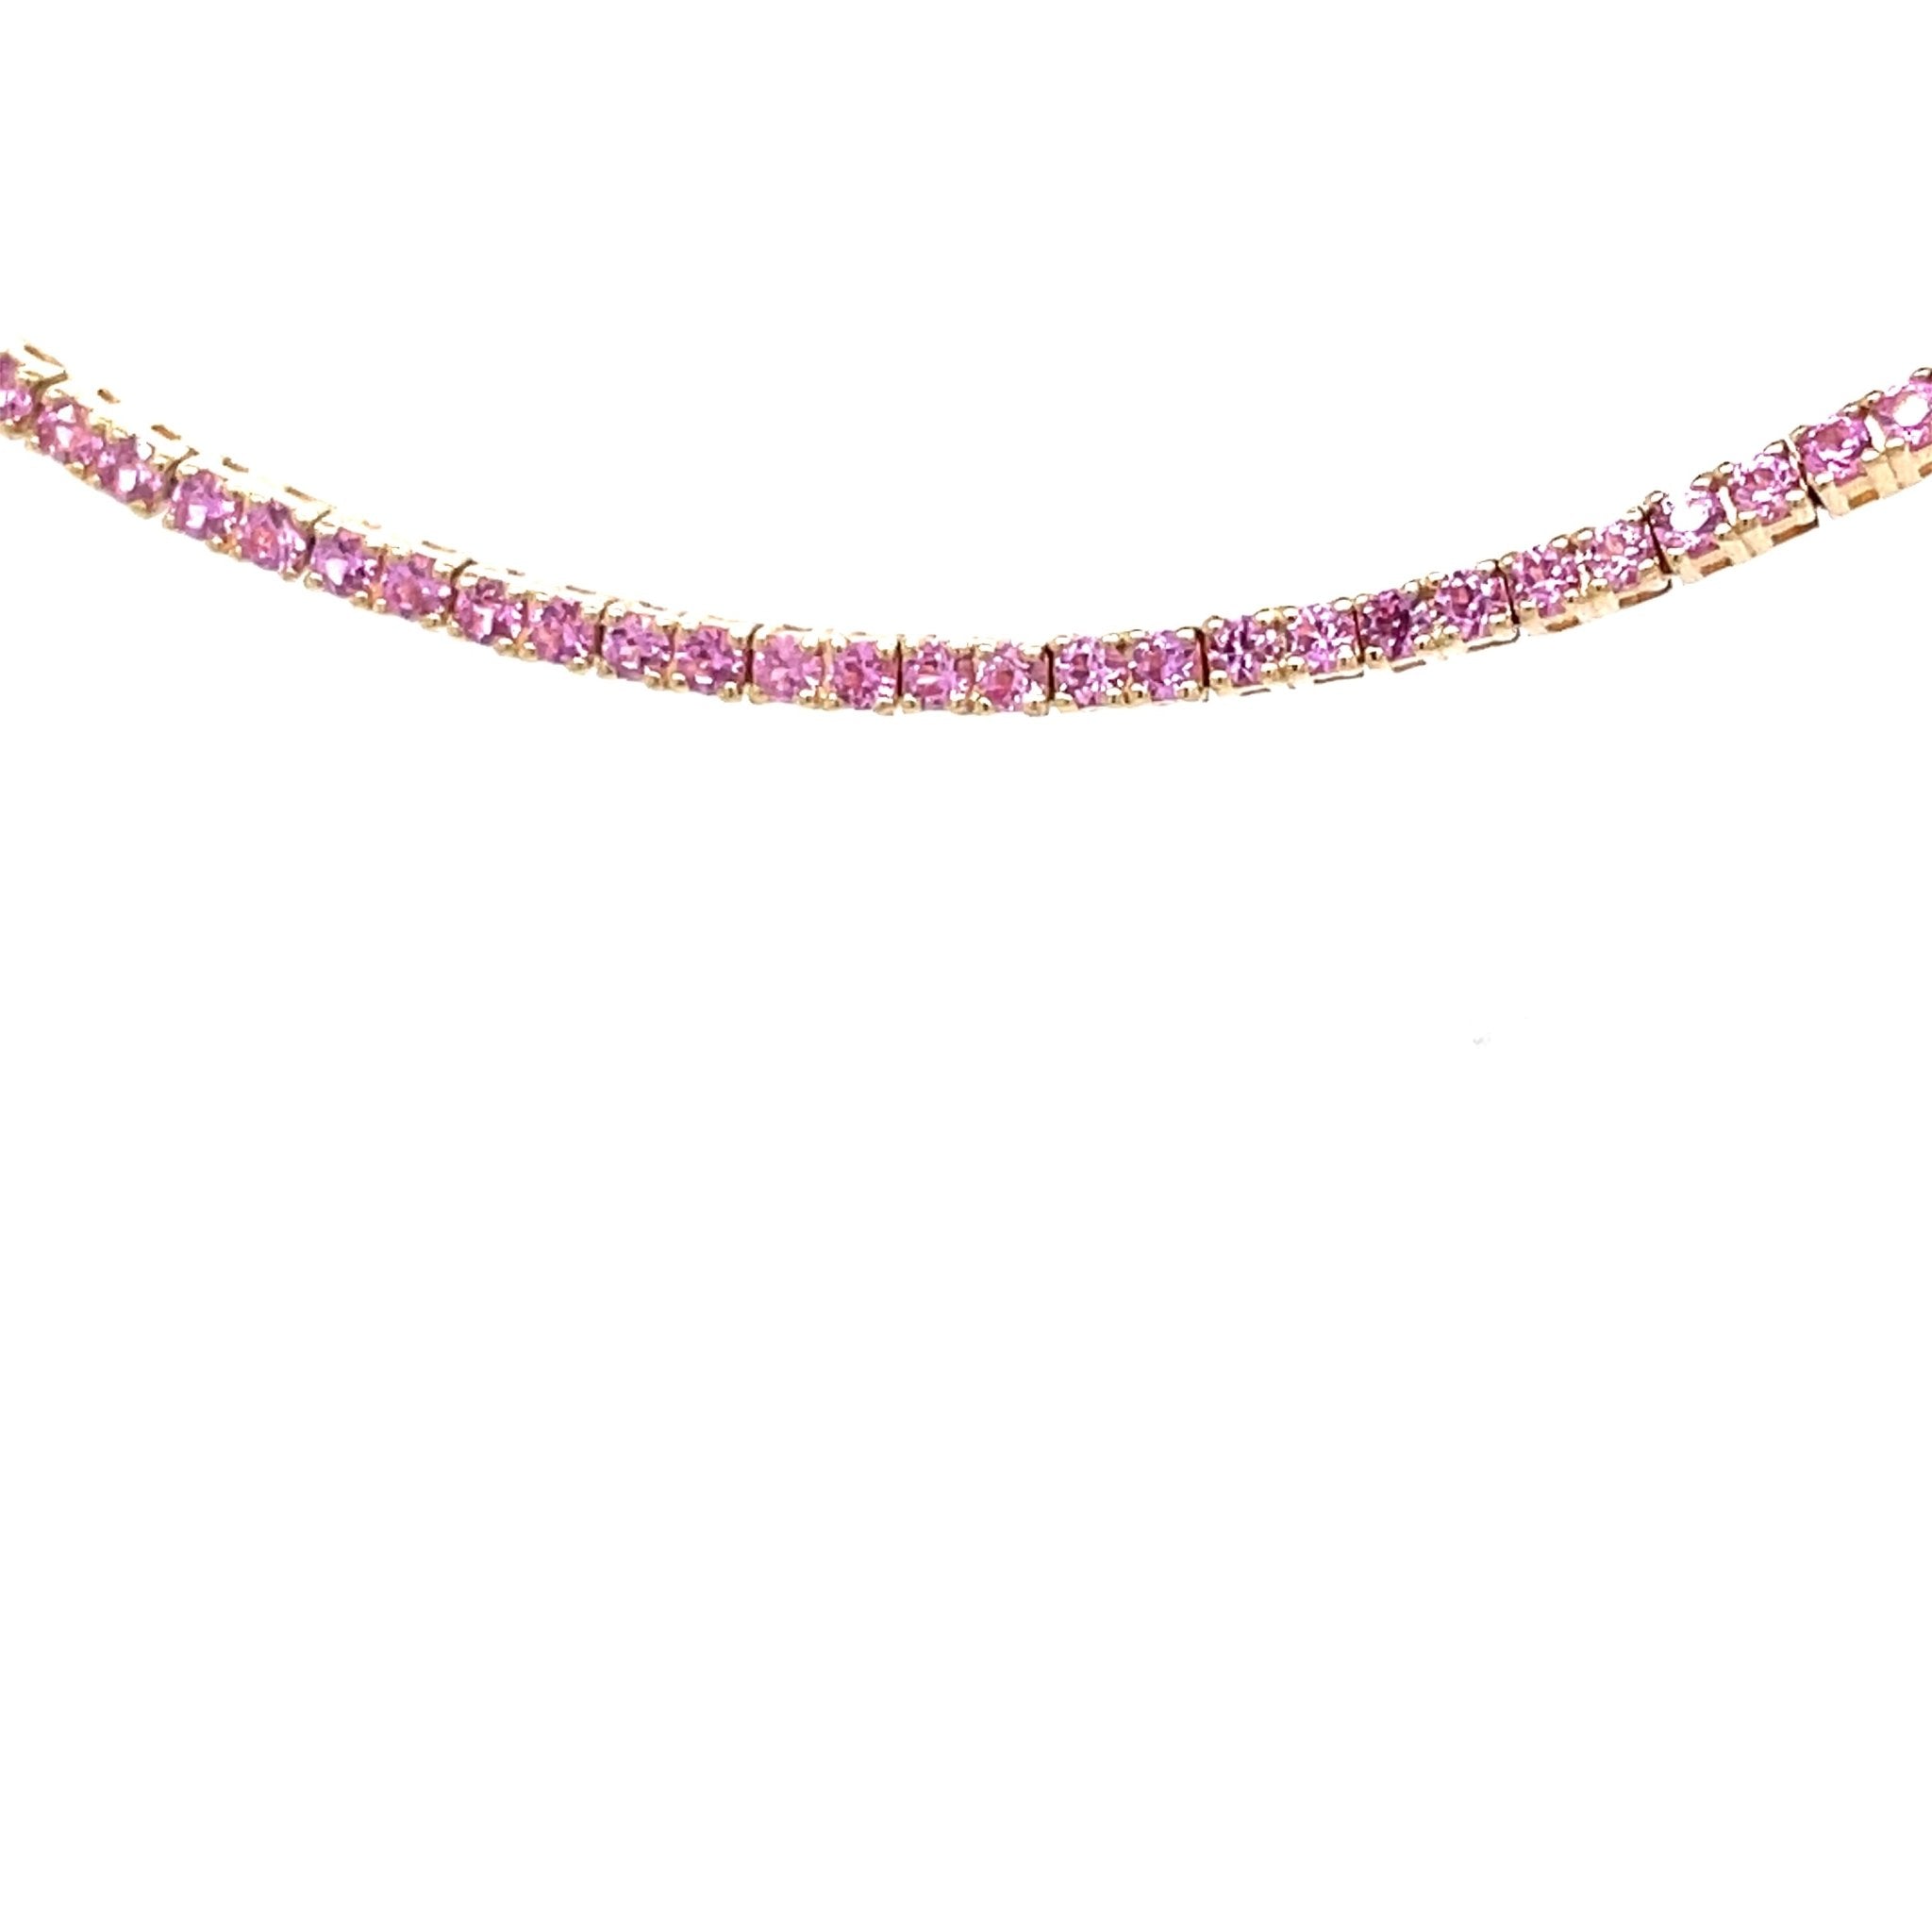 Swarovski Zirconia Matrix Tennis Necklace, Mixed Cuts, Pink, Rhodium  5666165 | eBay